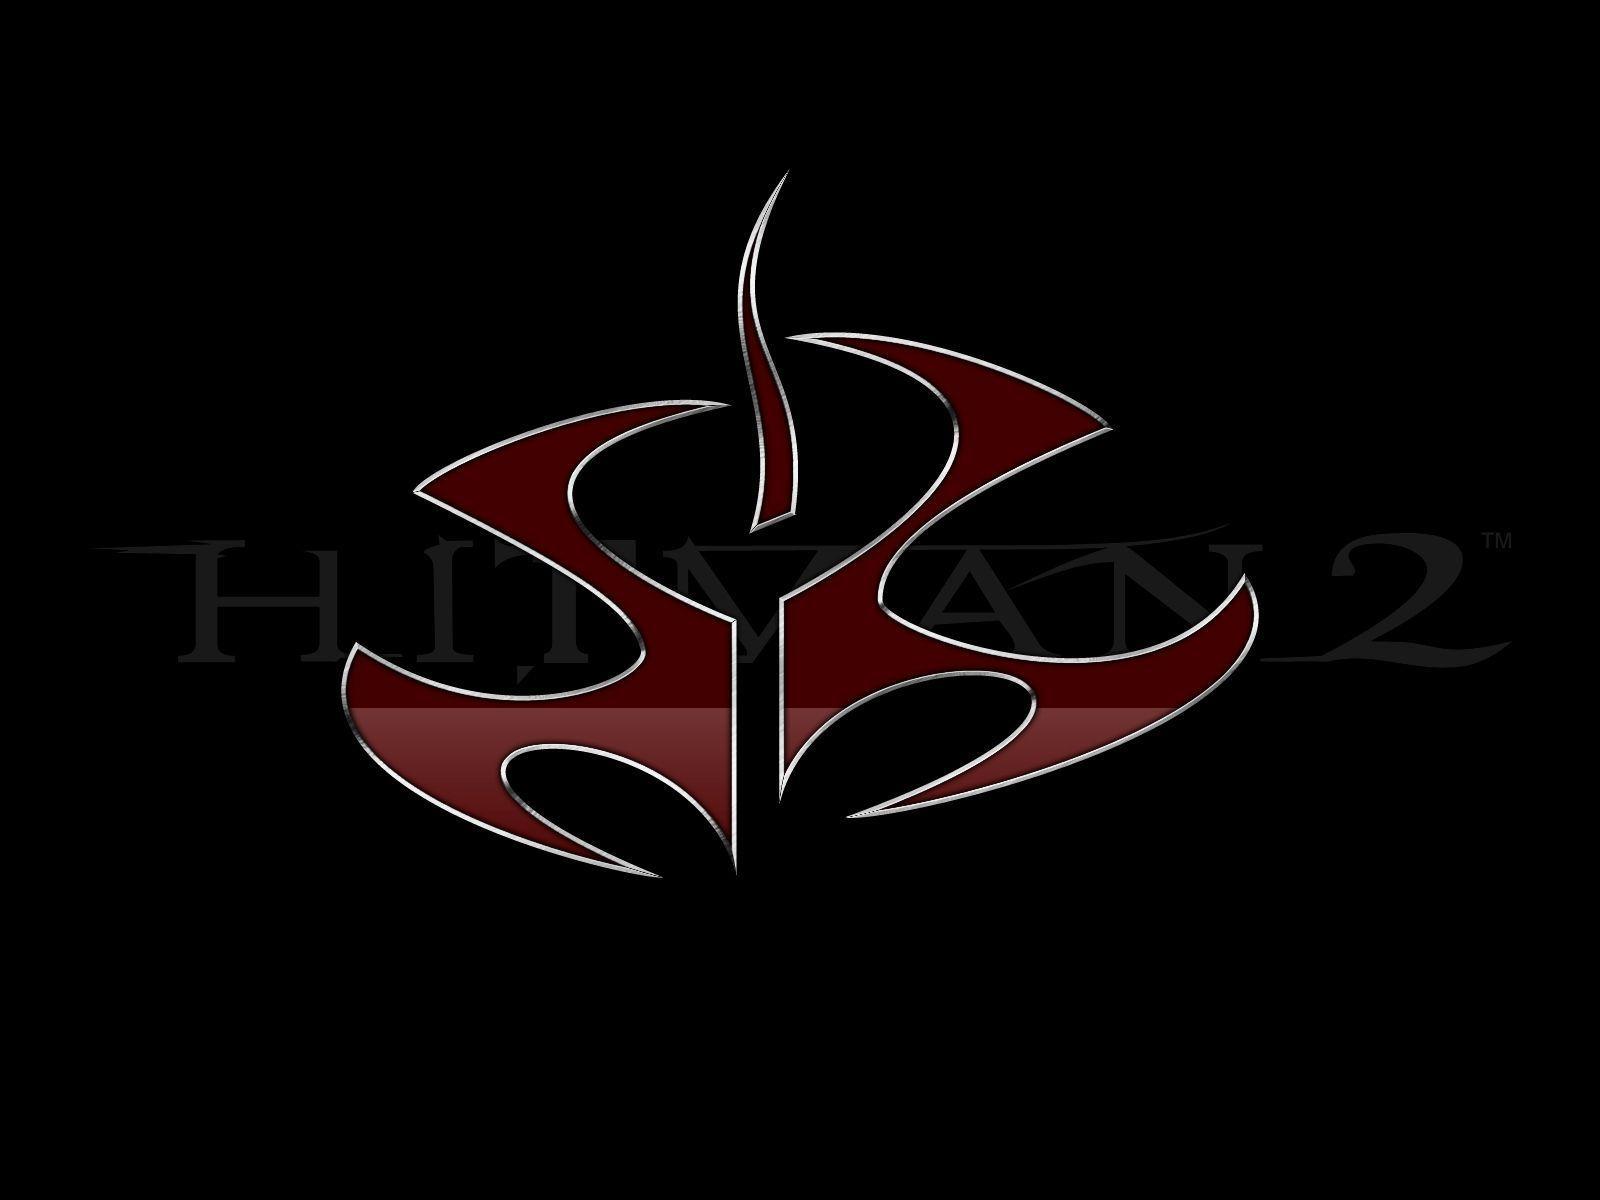 Hitman Logo - Download Hitman Logo wallpapers to your cell phone hitman logo | HD ...